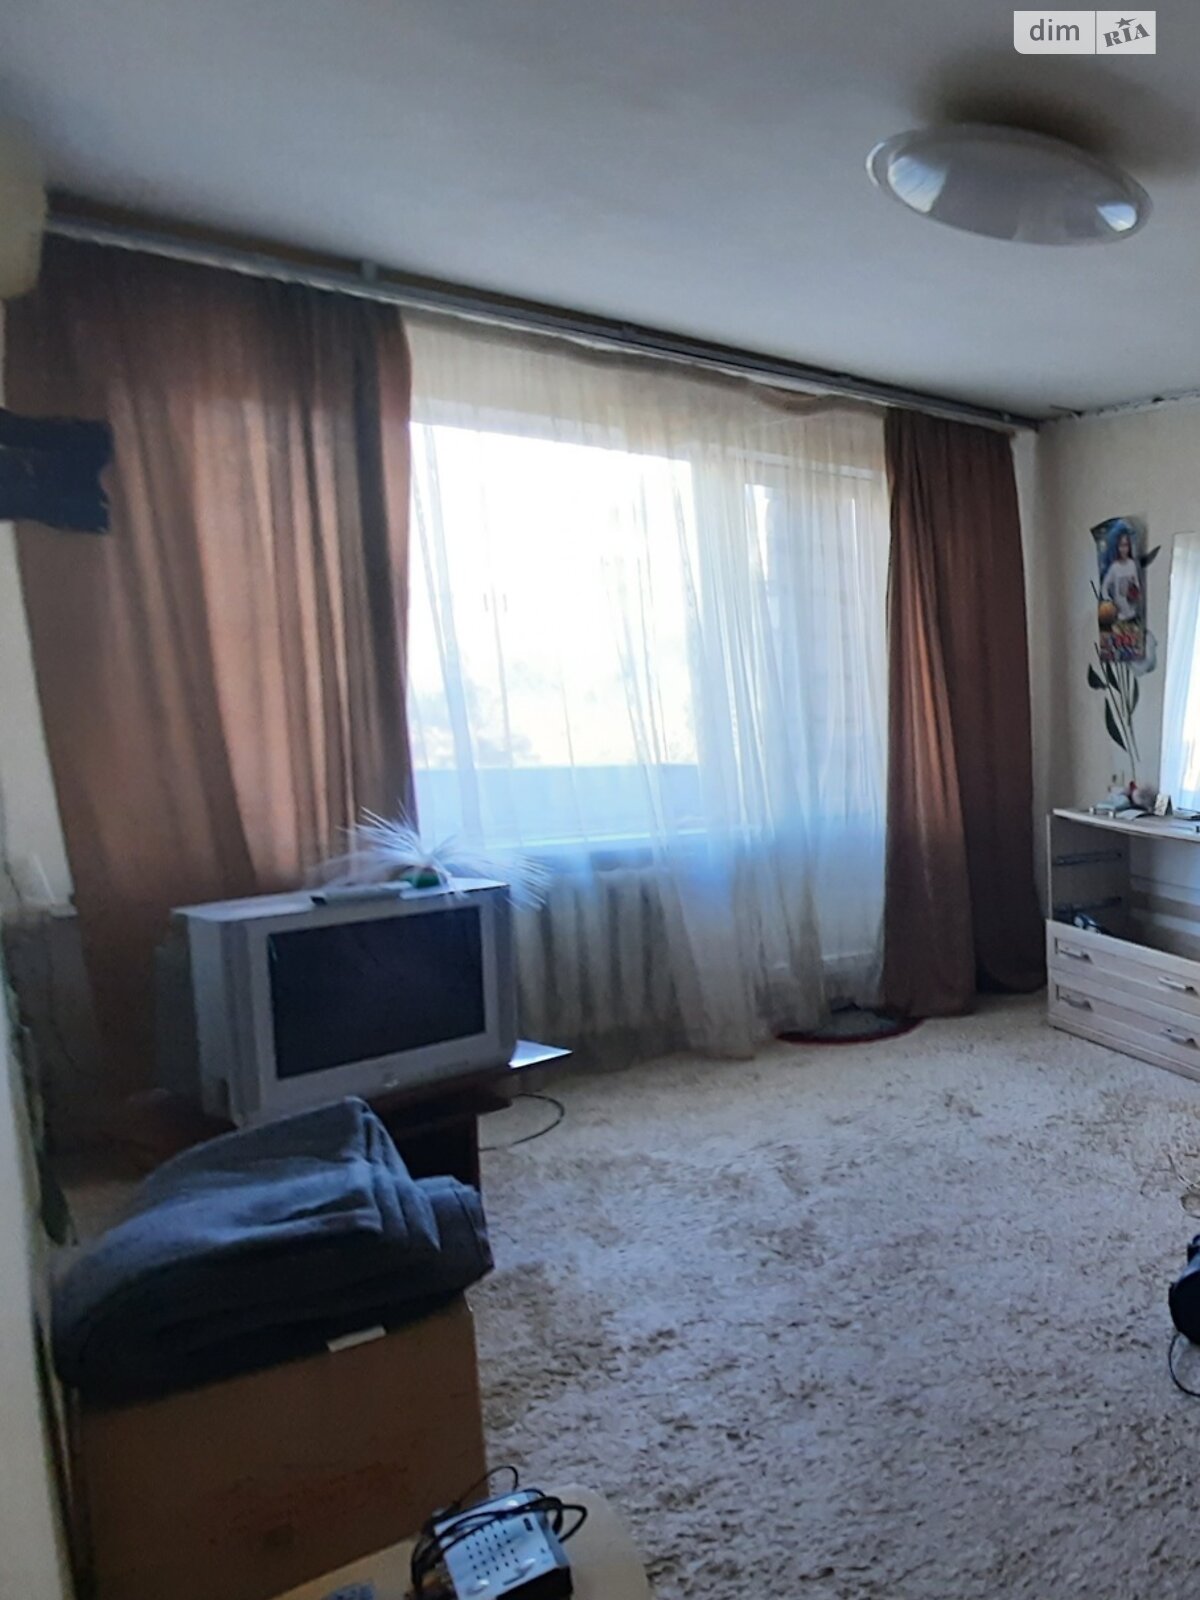 Продажа однокомнатной квартиры в Херсоне, на ул. Лавренева 25, район Шуменский фото 1